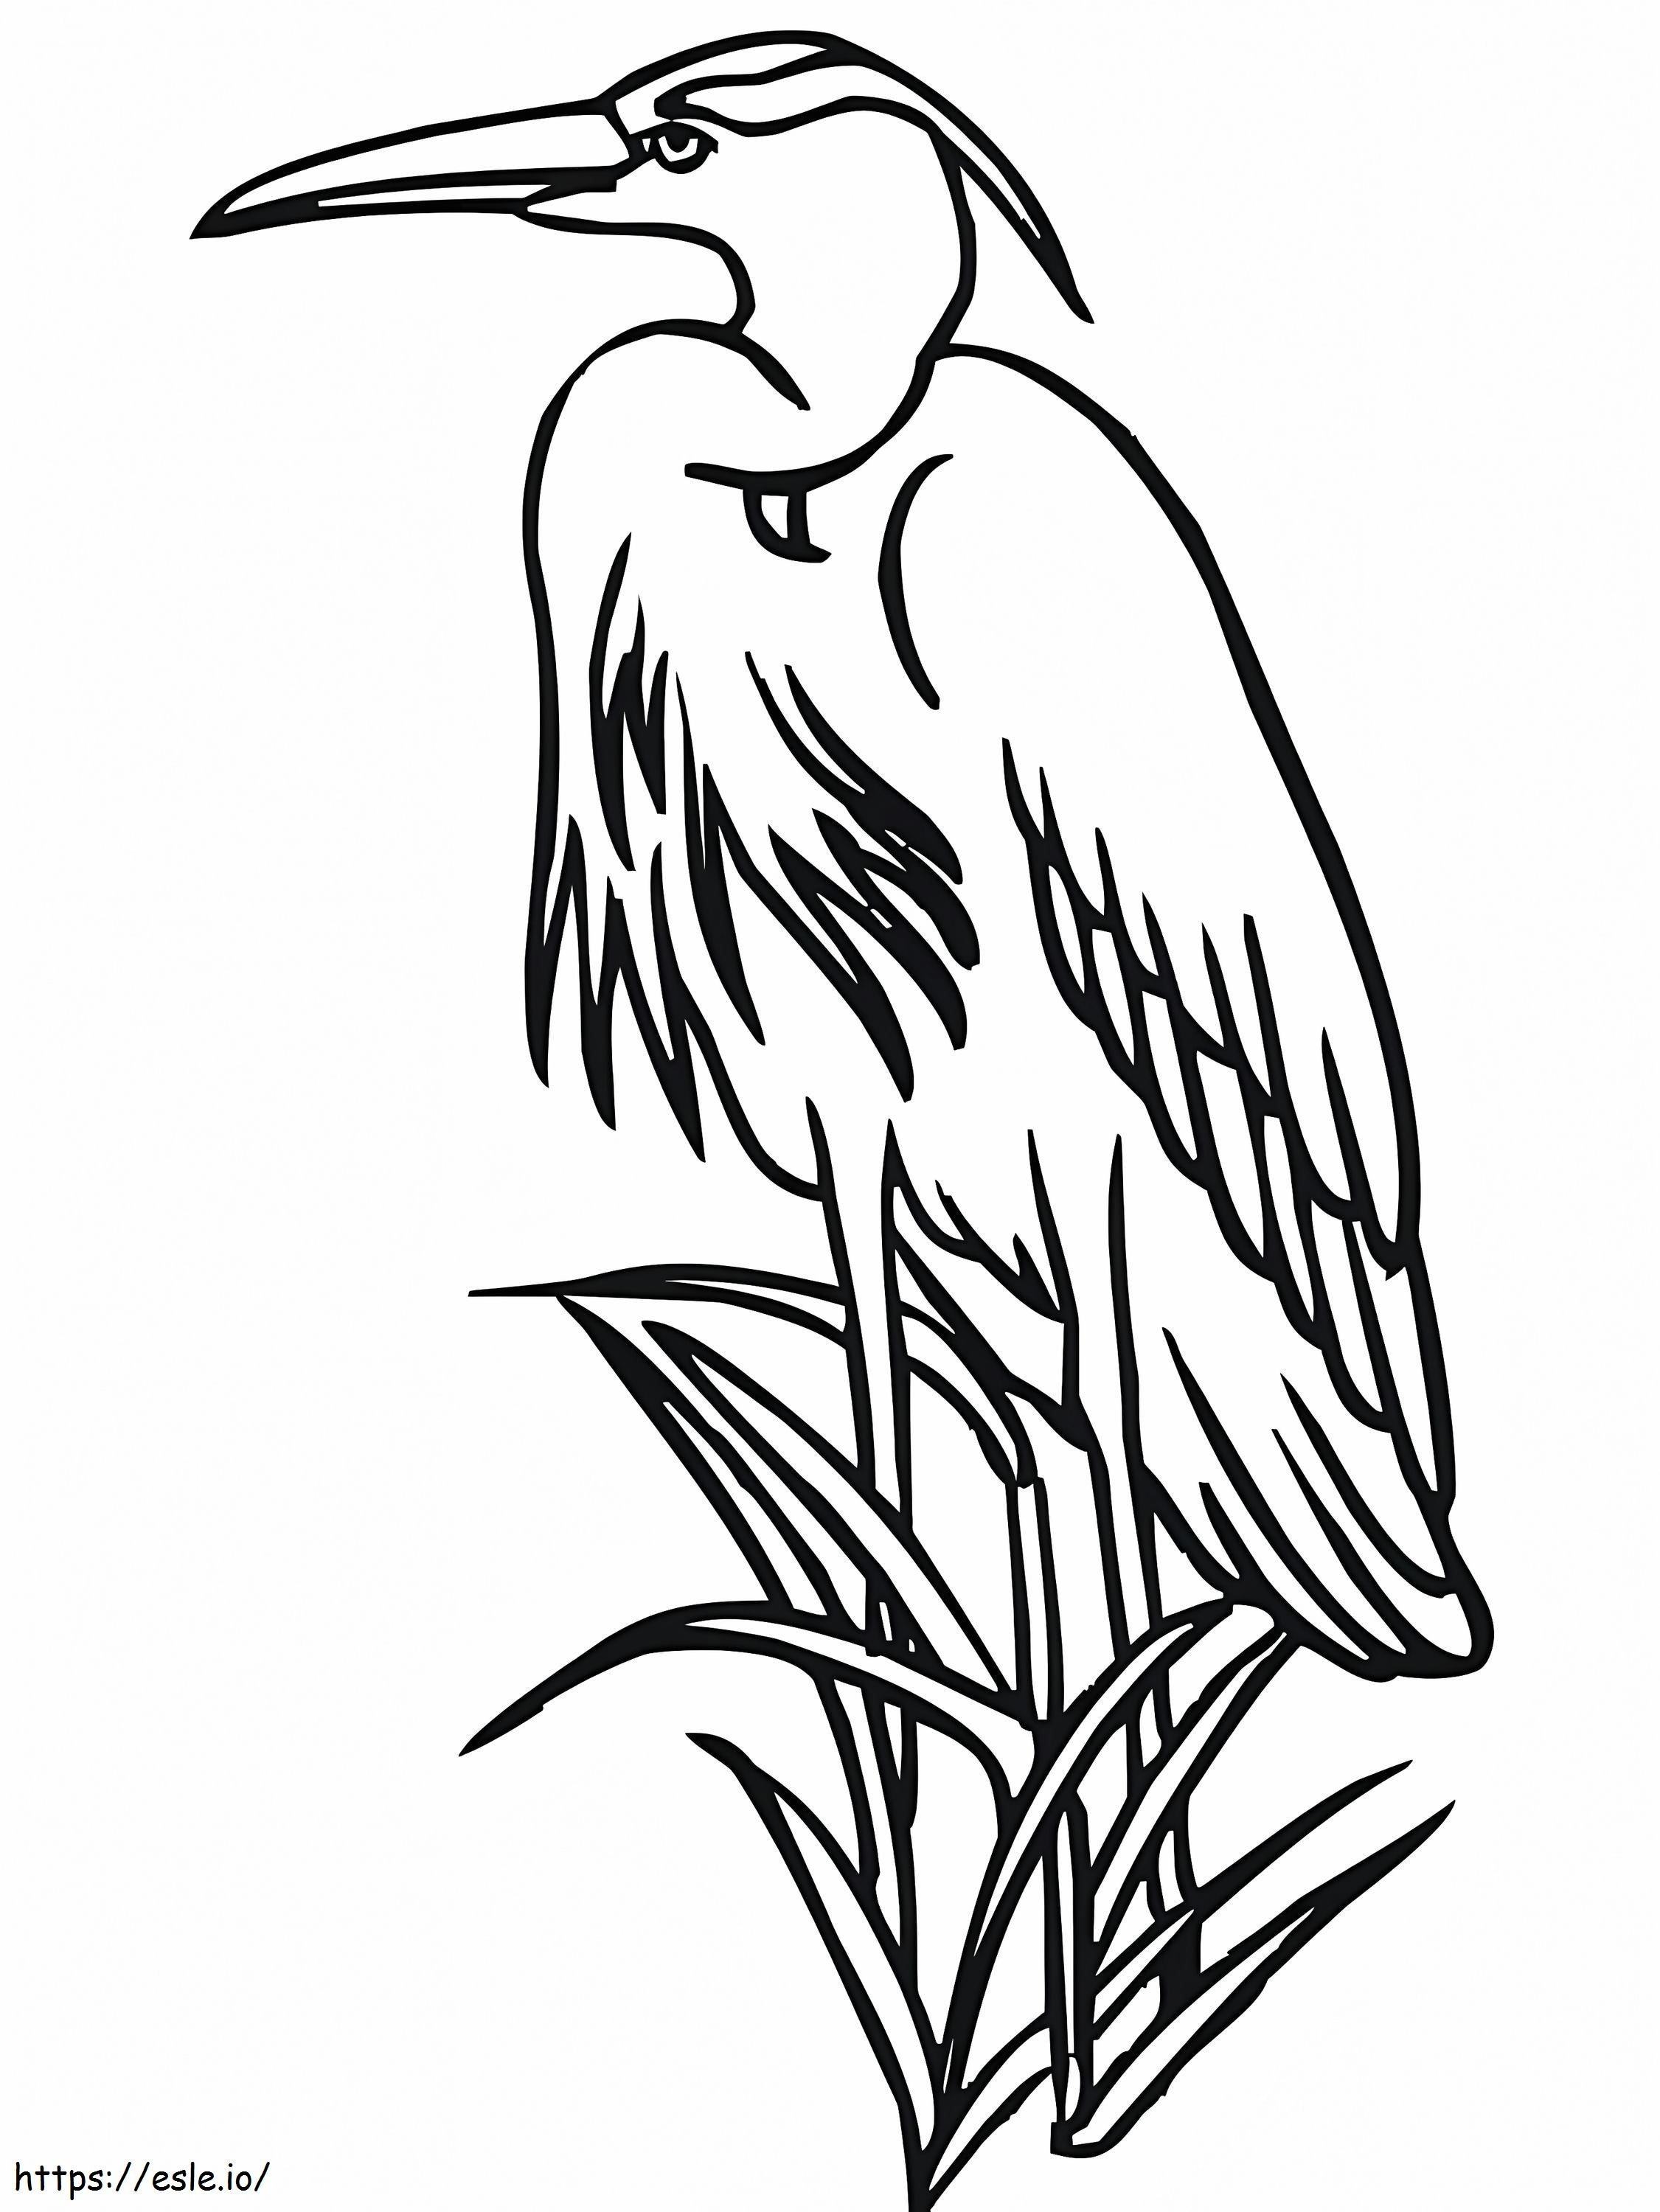 Printable Heron coloring page